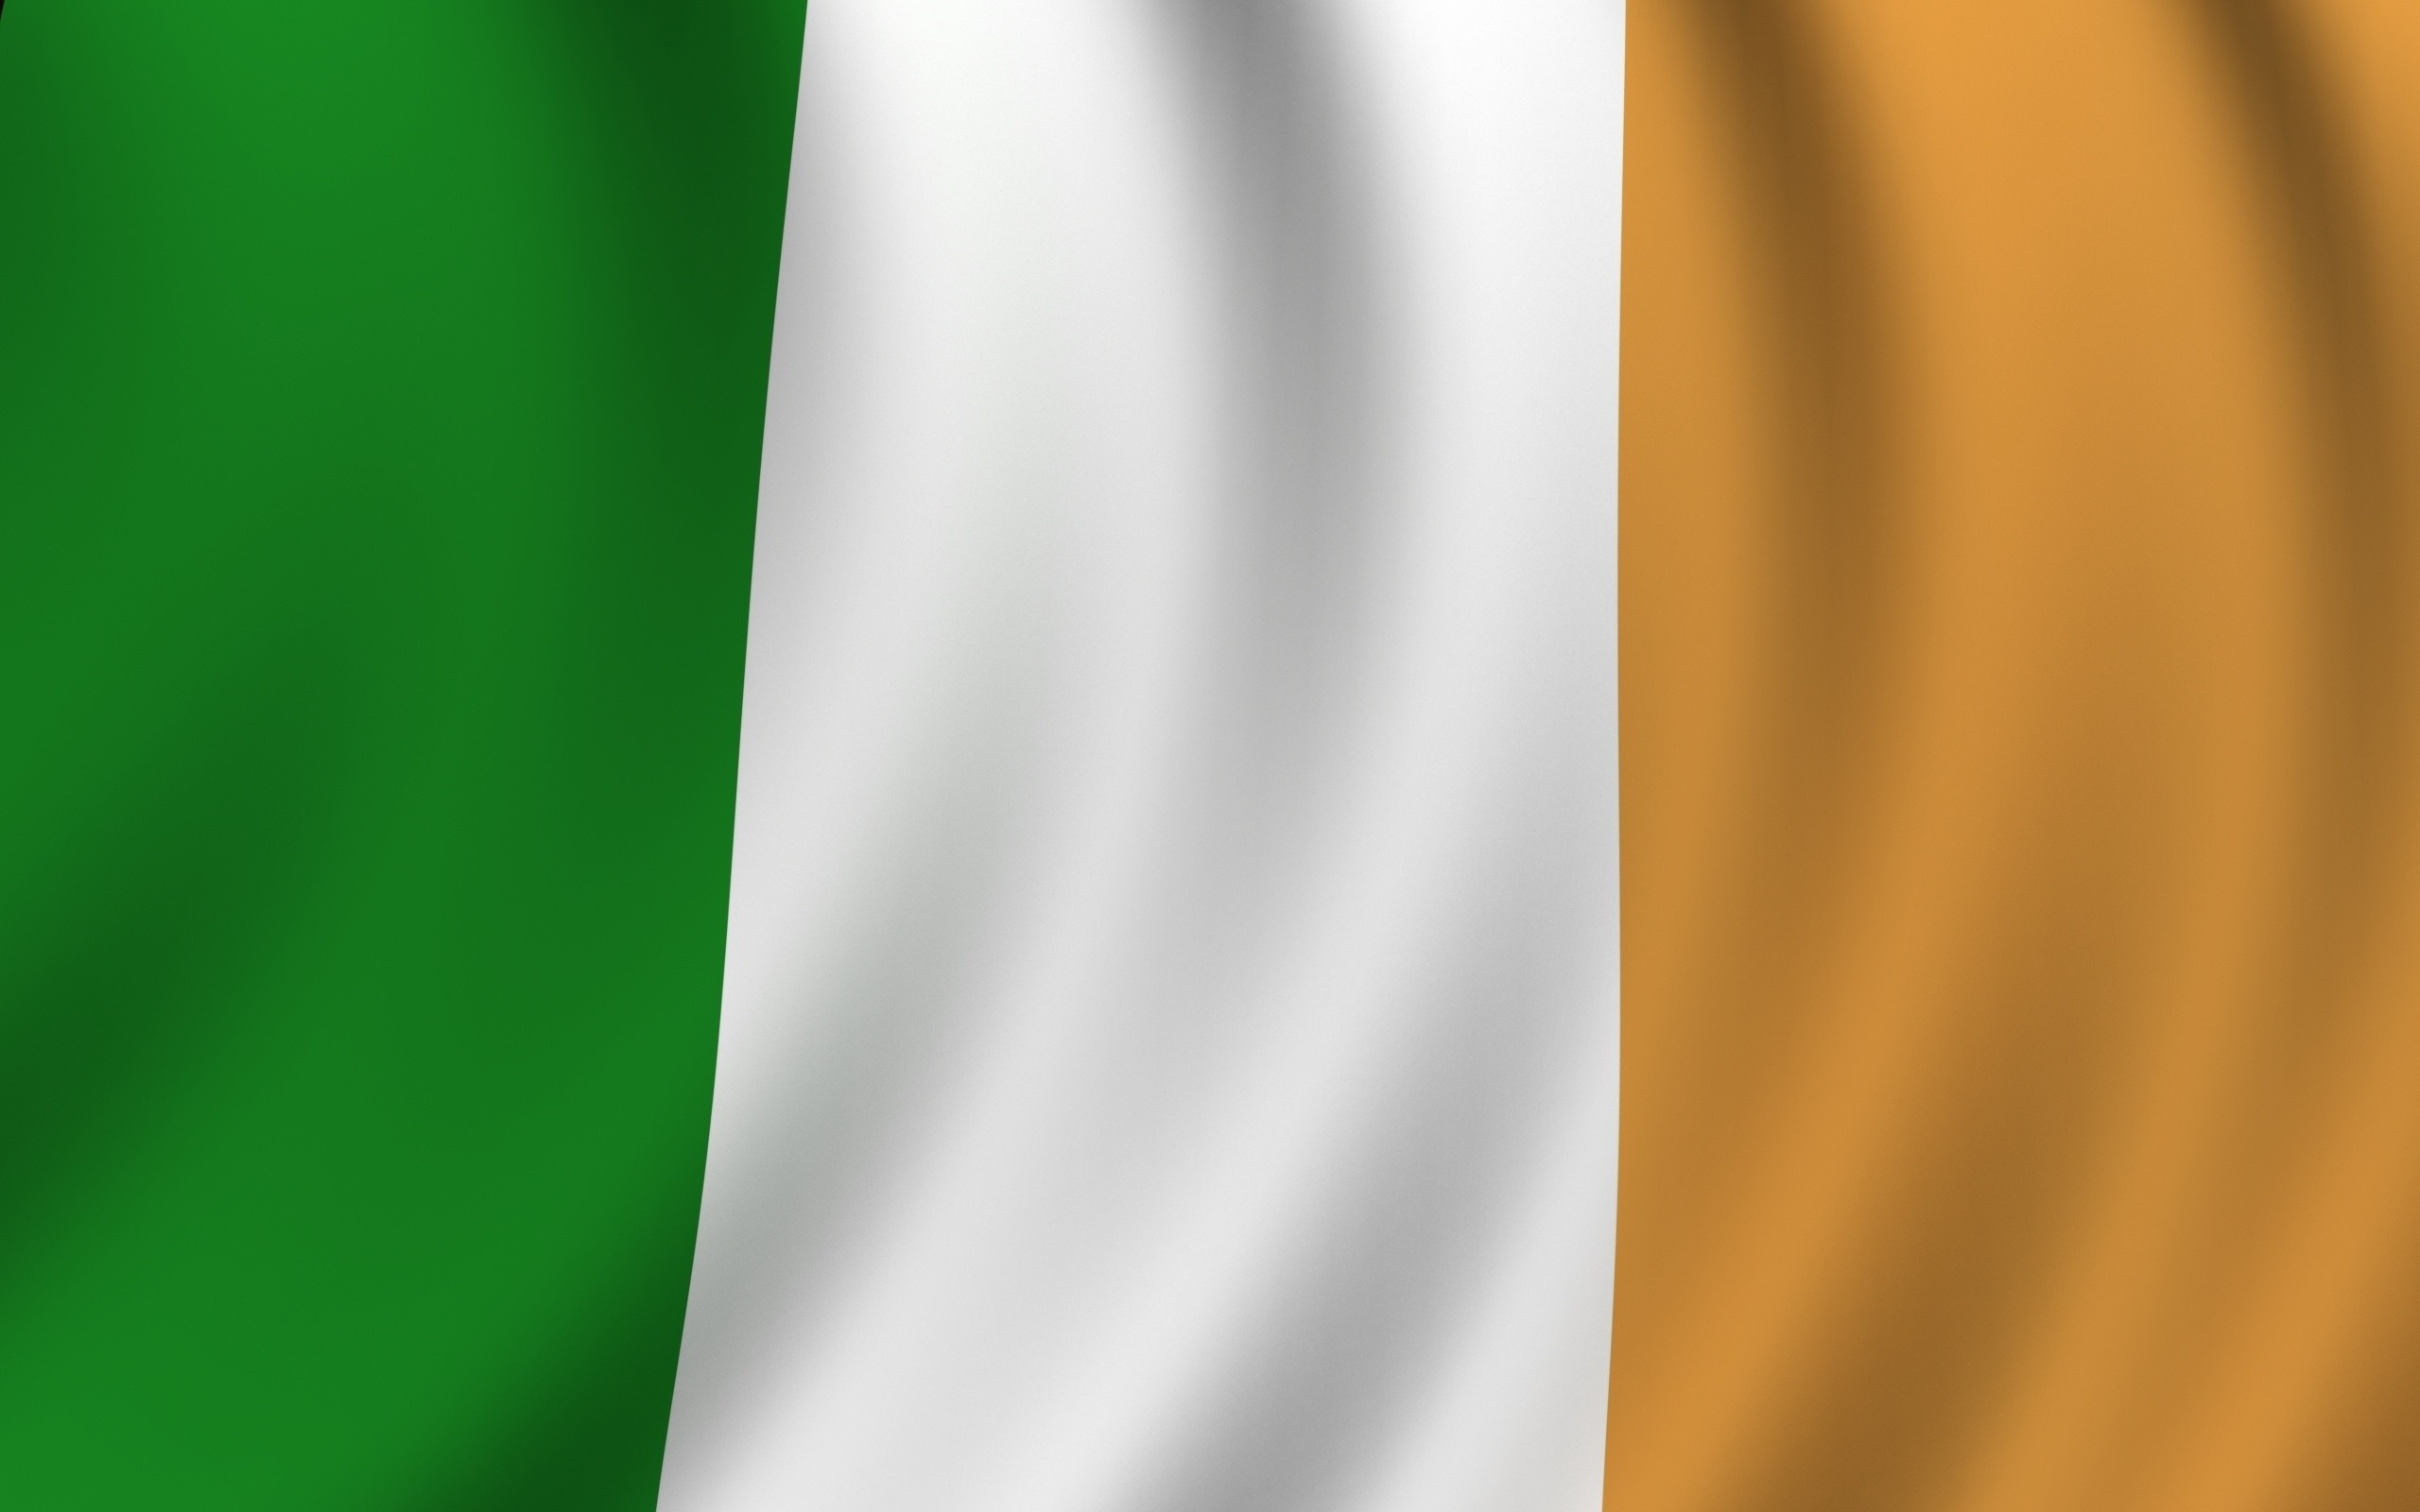 2560x1600 Irish Flag Wallpaper Ireland flag wallpaper in